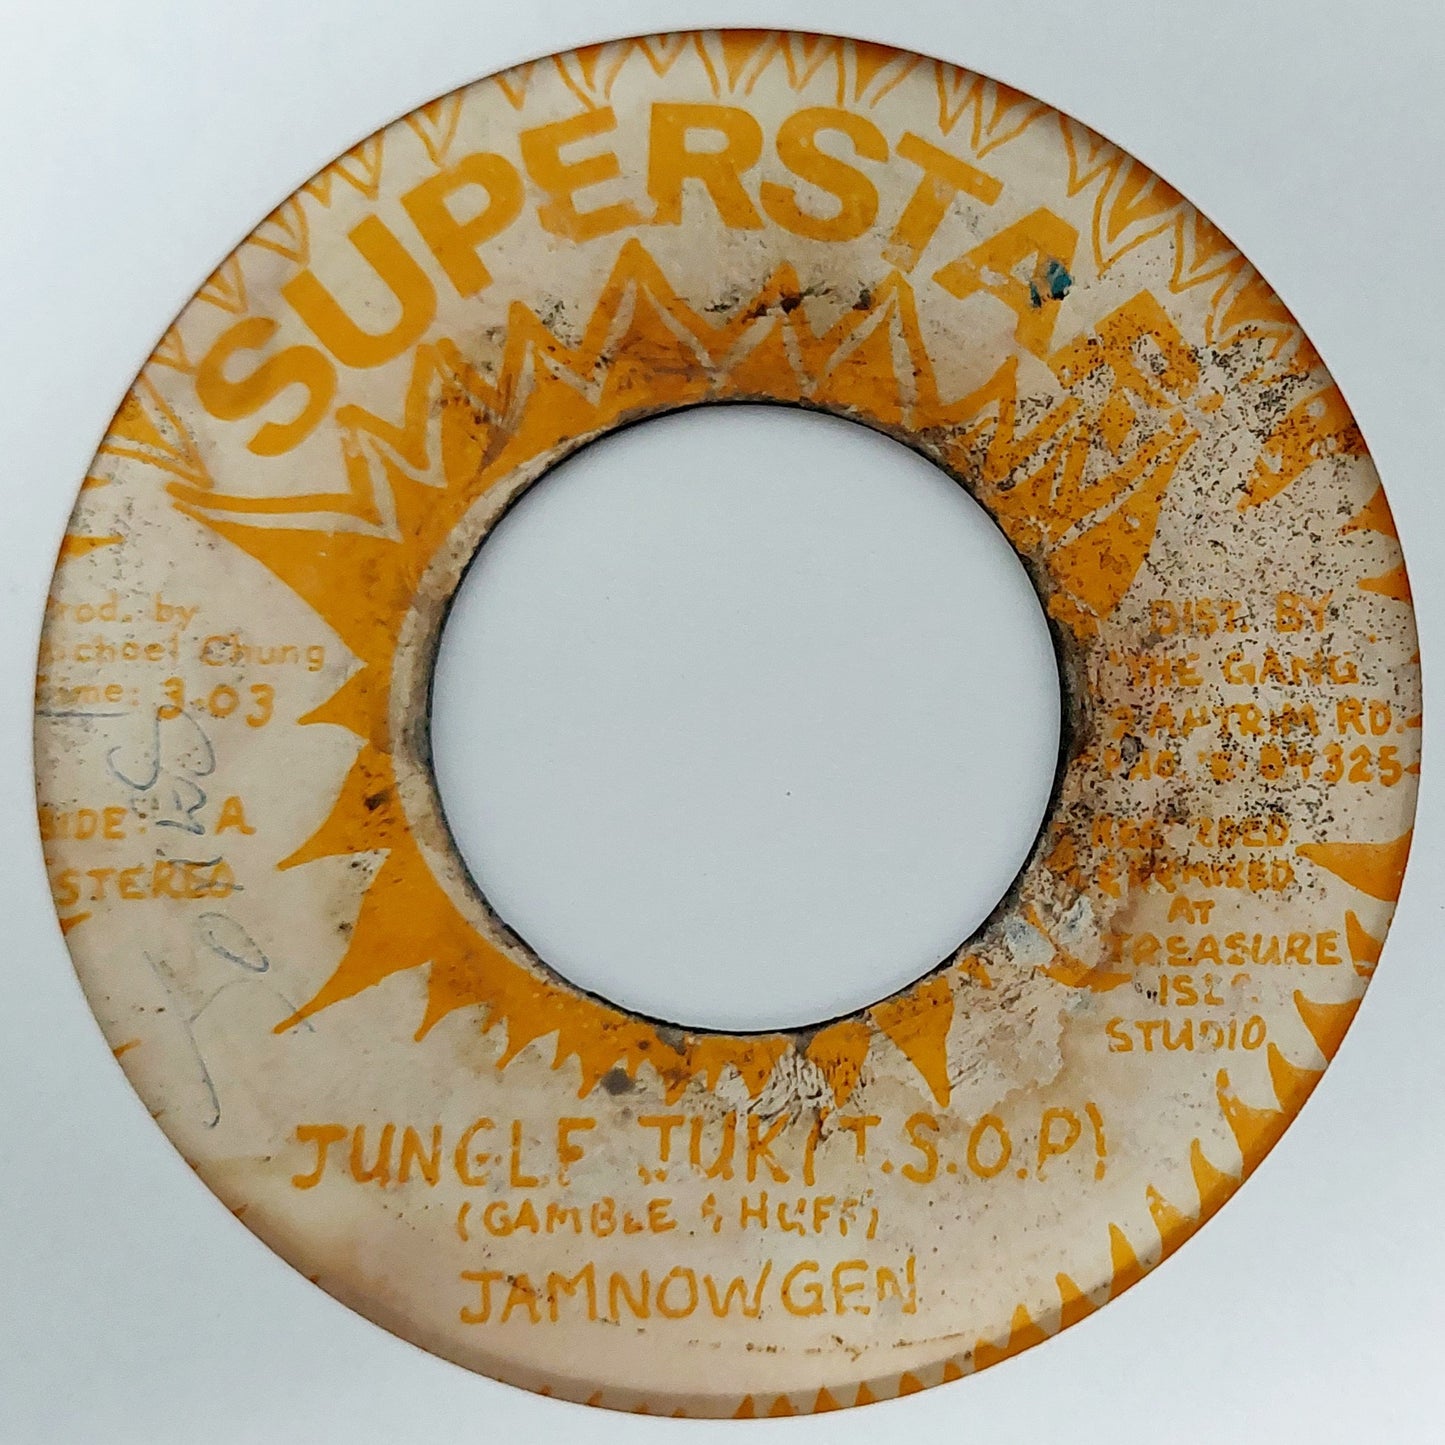 Jamnowgen - Jungle Juk (T.S.O.P.)